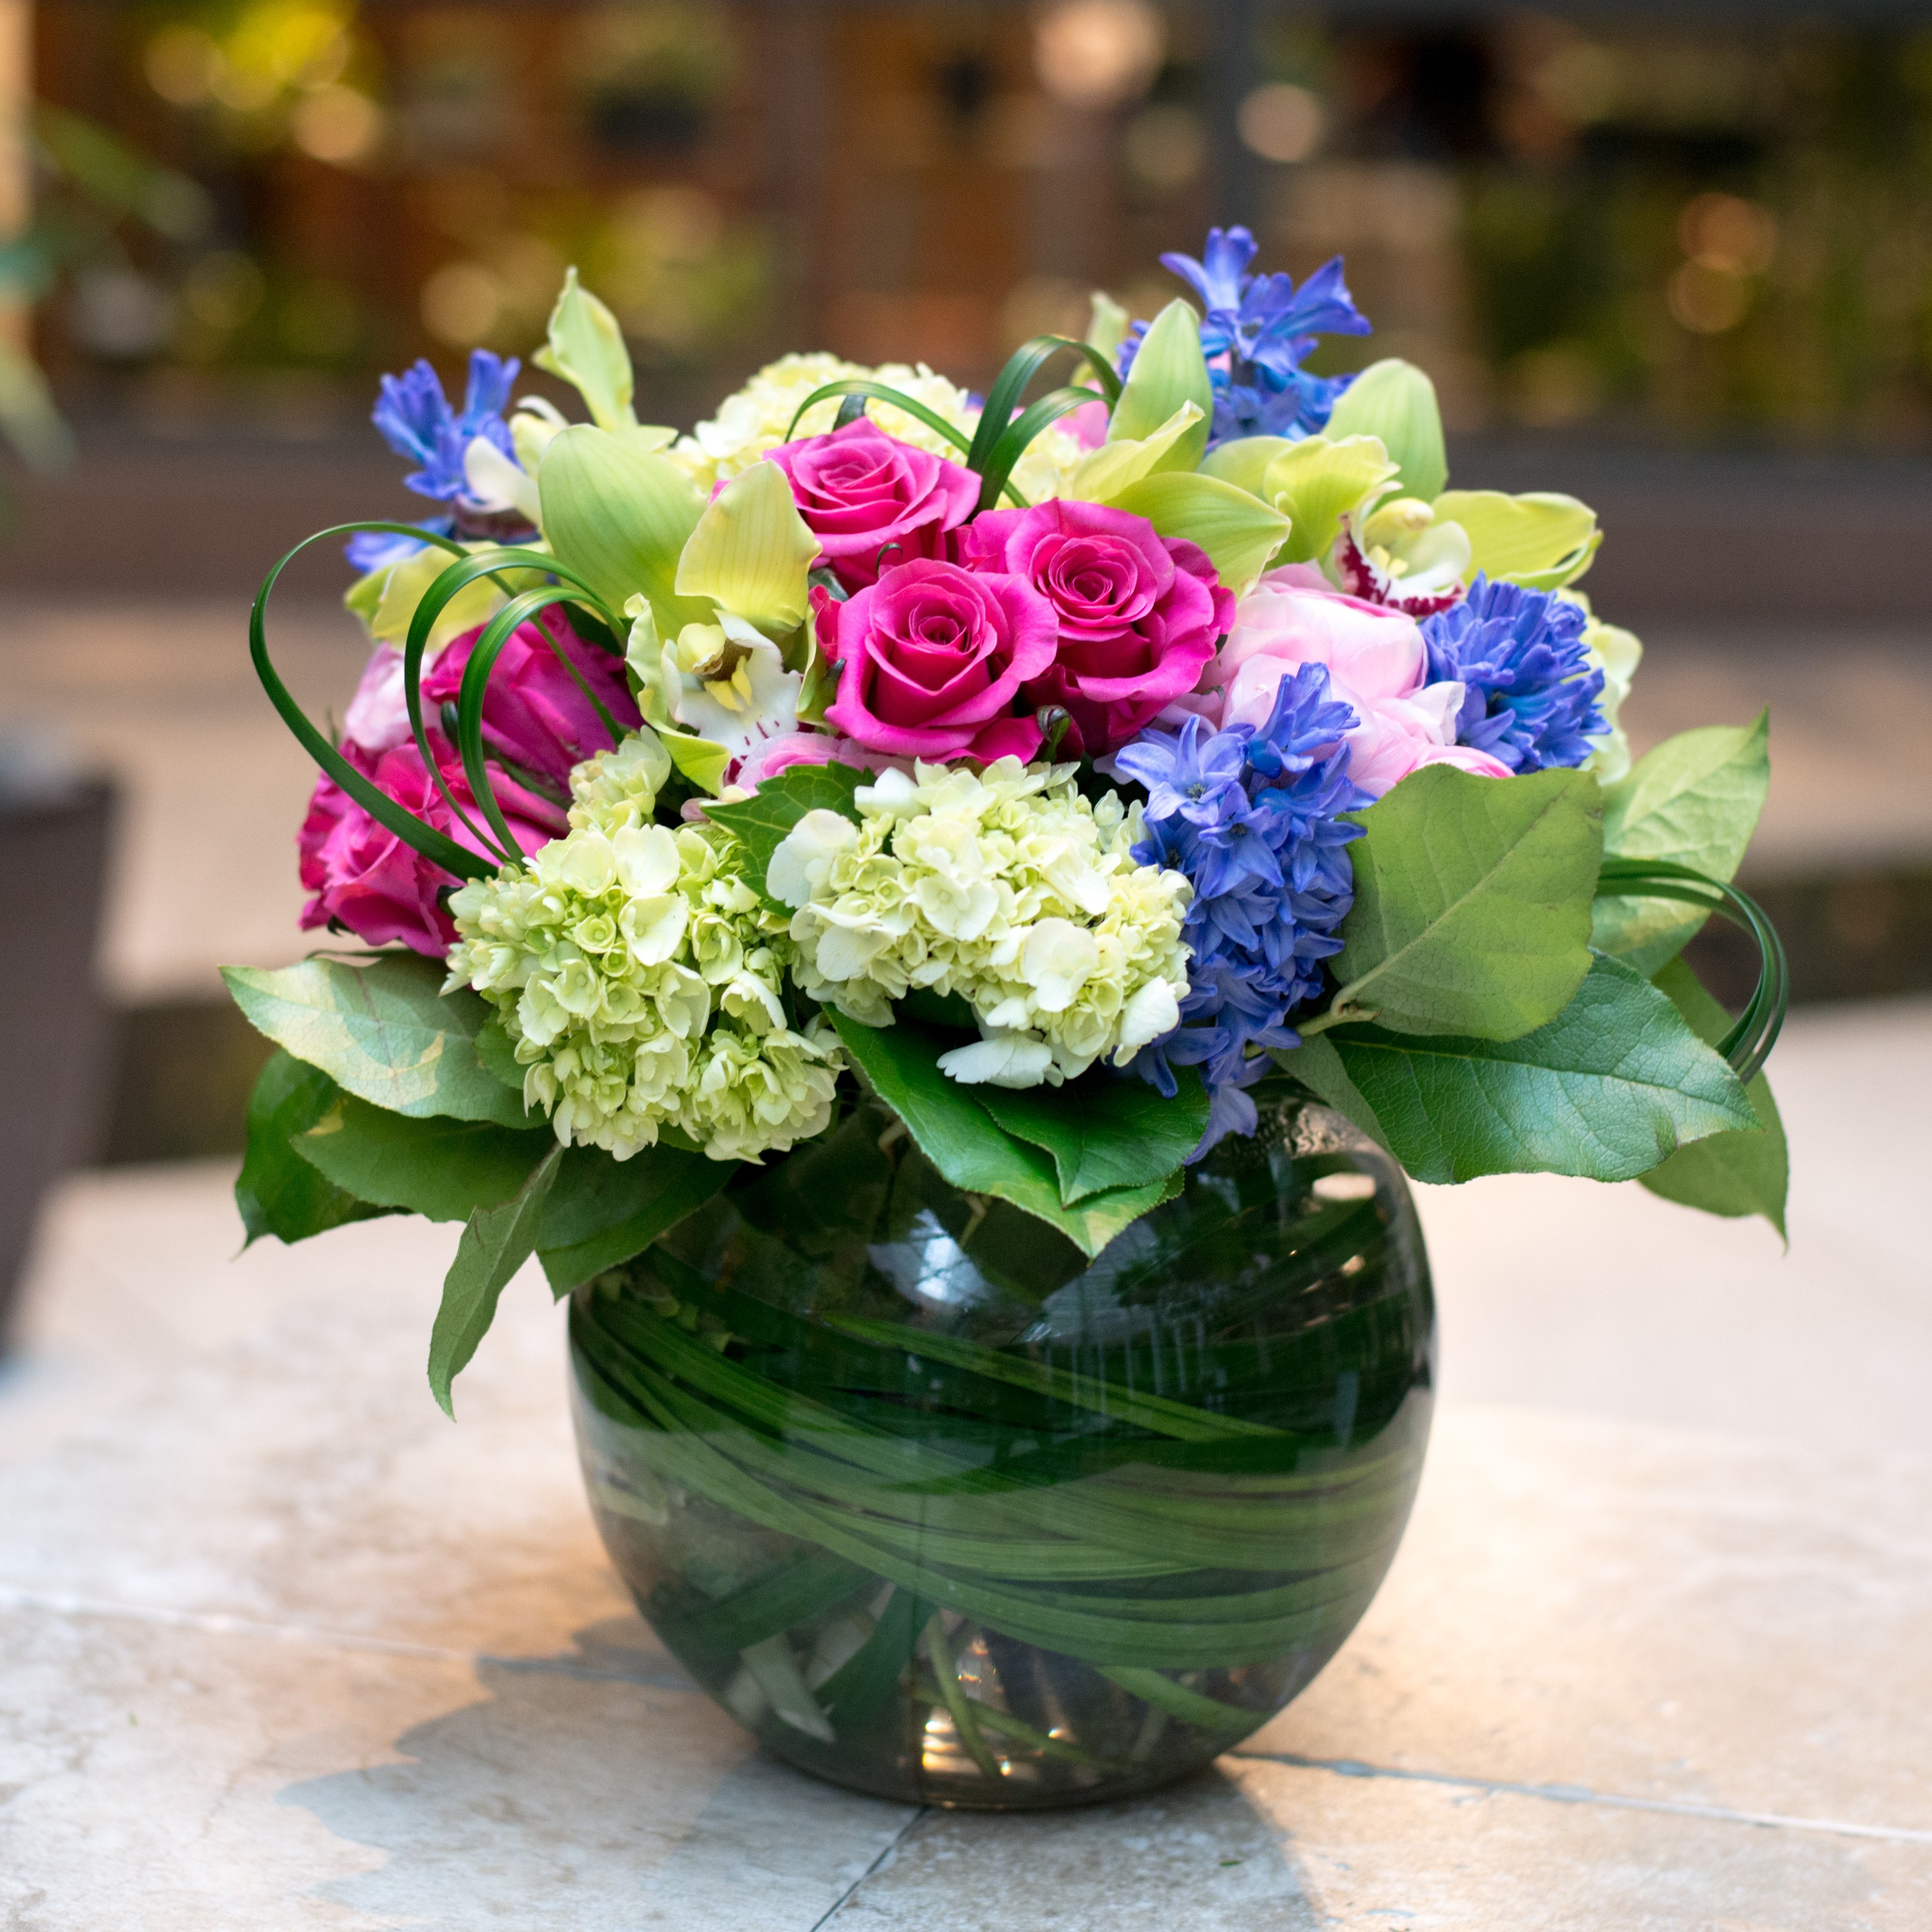 Boston Florist | Flower Delivery in Cambridge and Boston